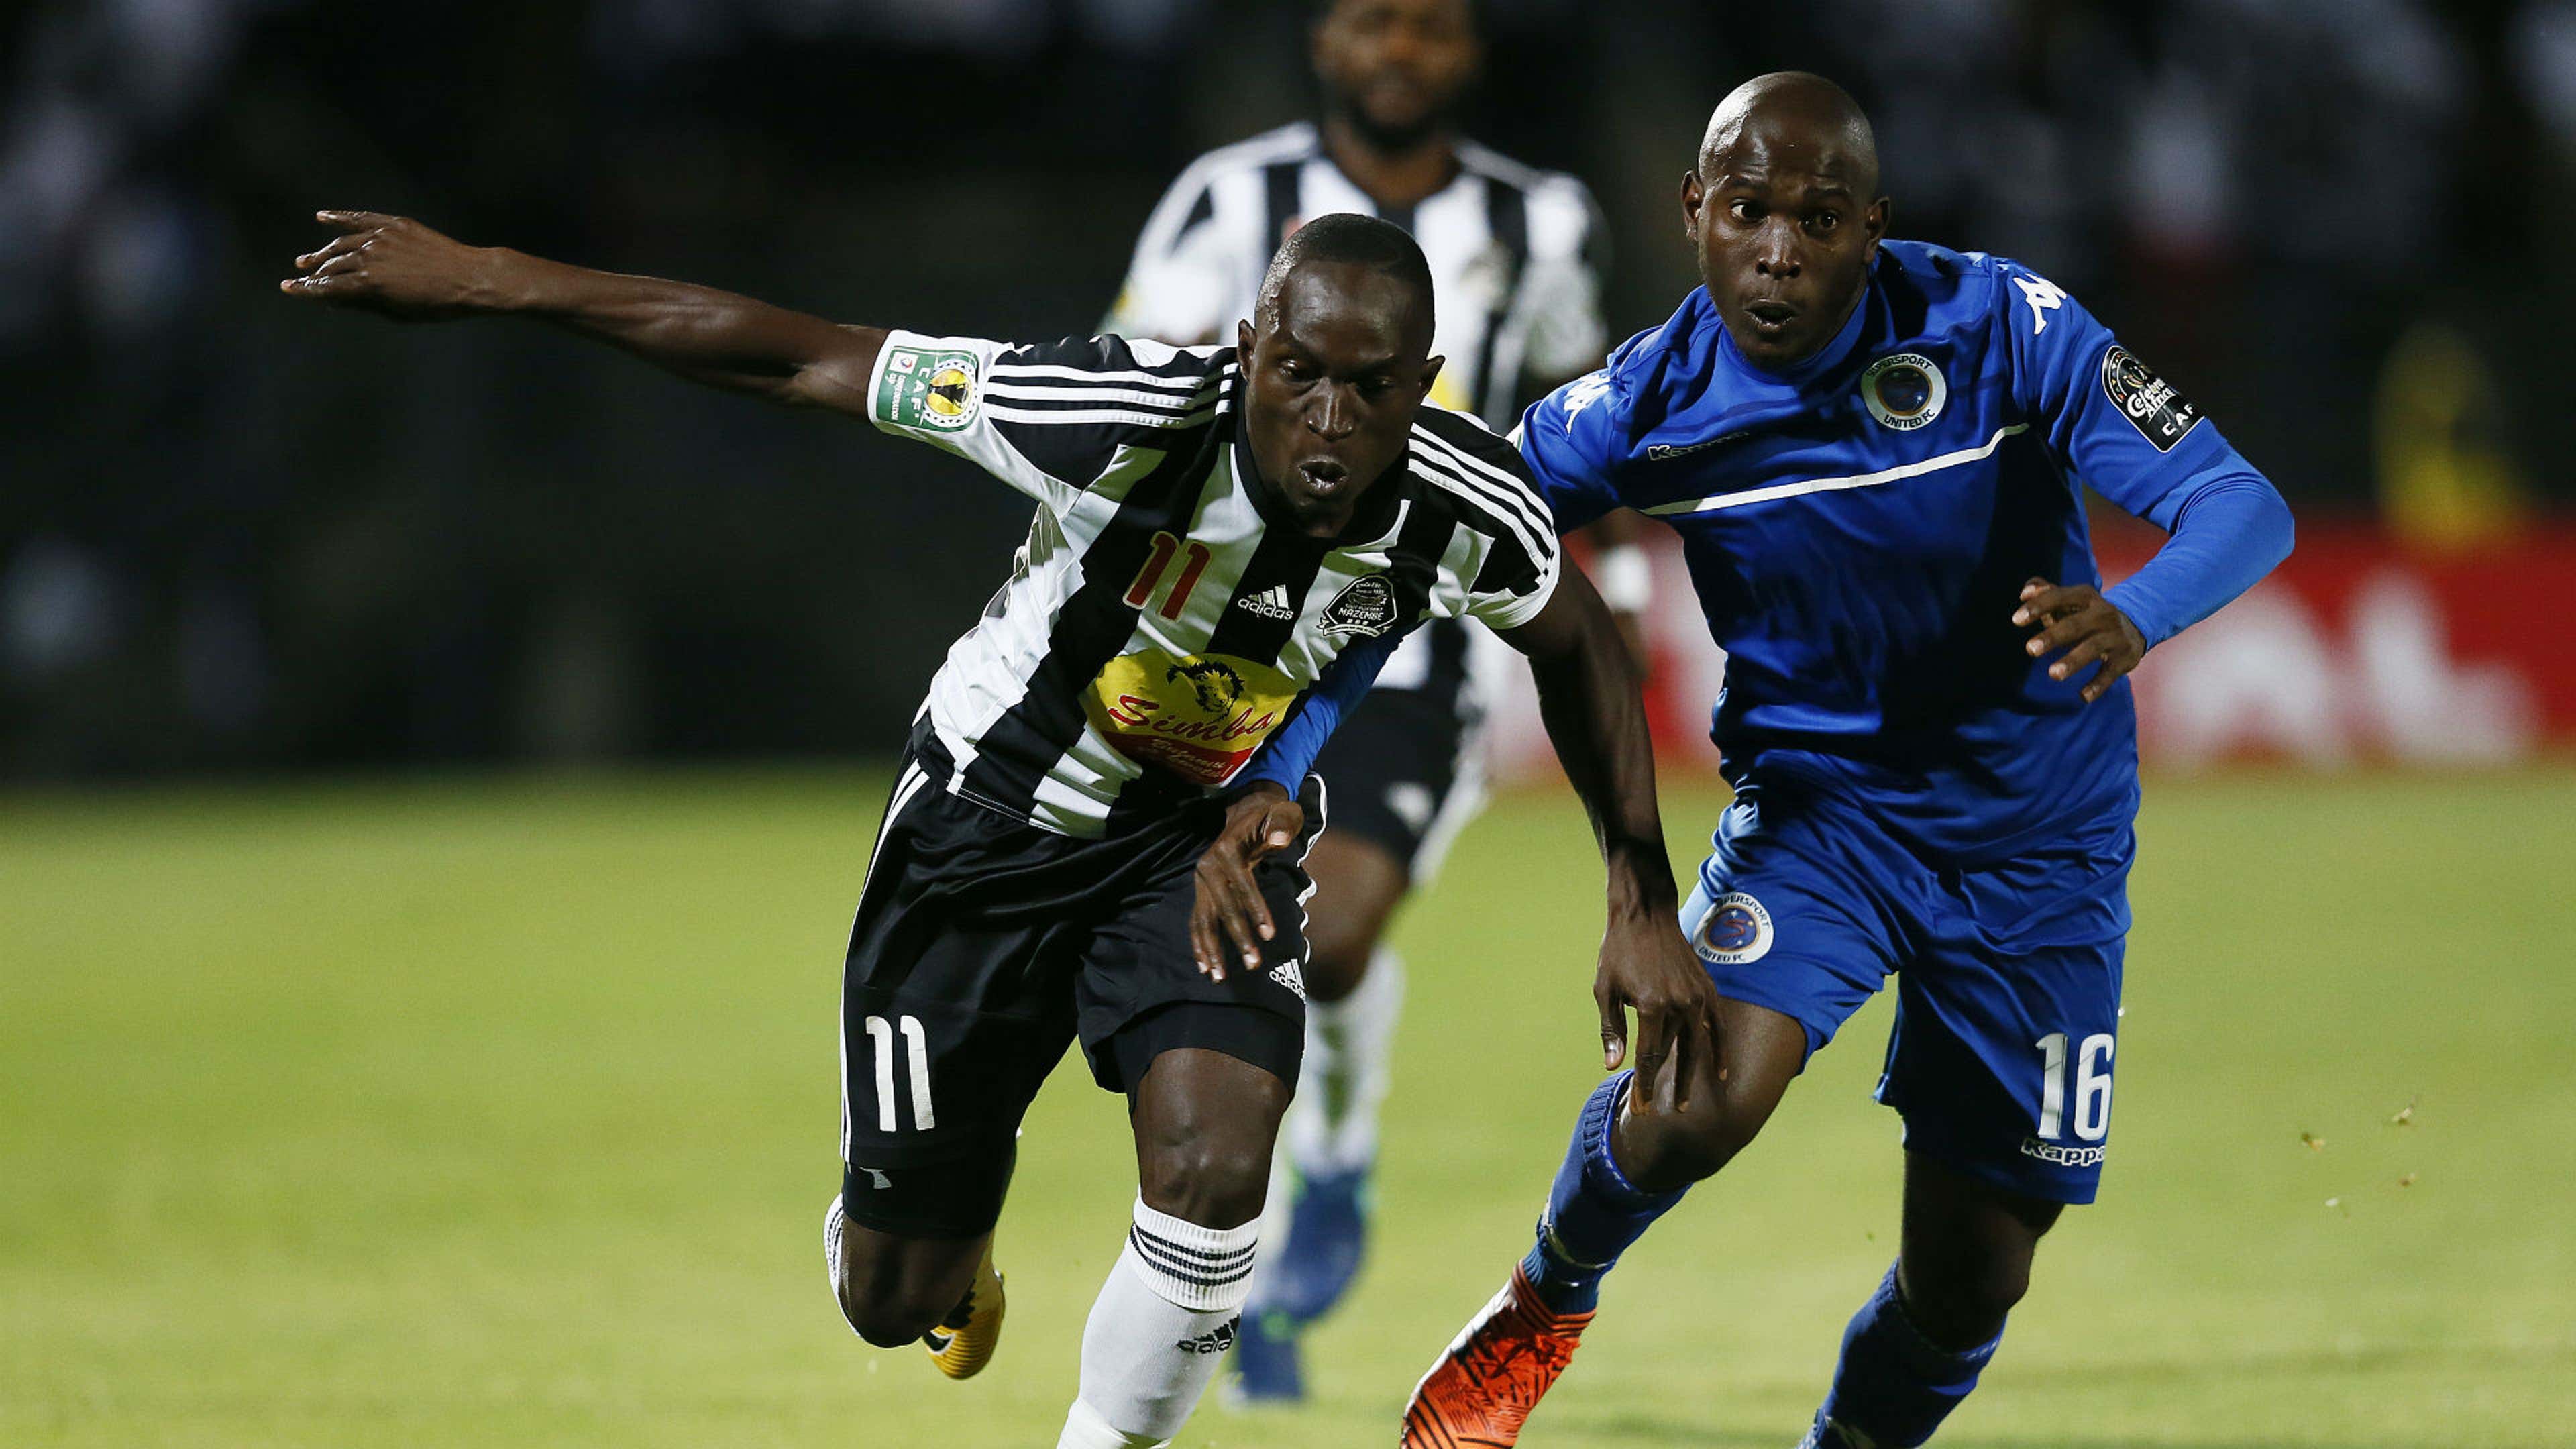 Orlando Pirates reach CAF Cup final despite shock home defeat - New Vision  Official